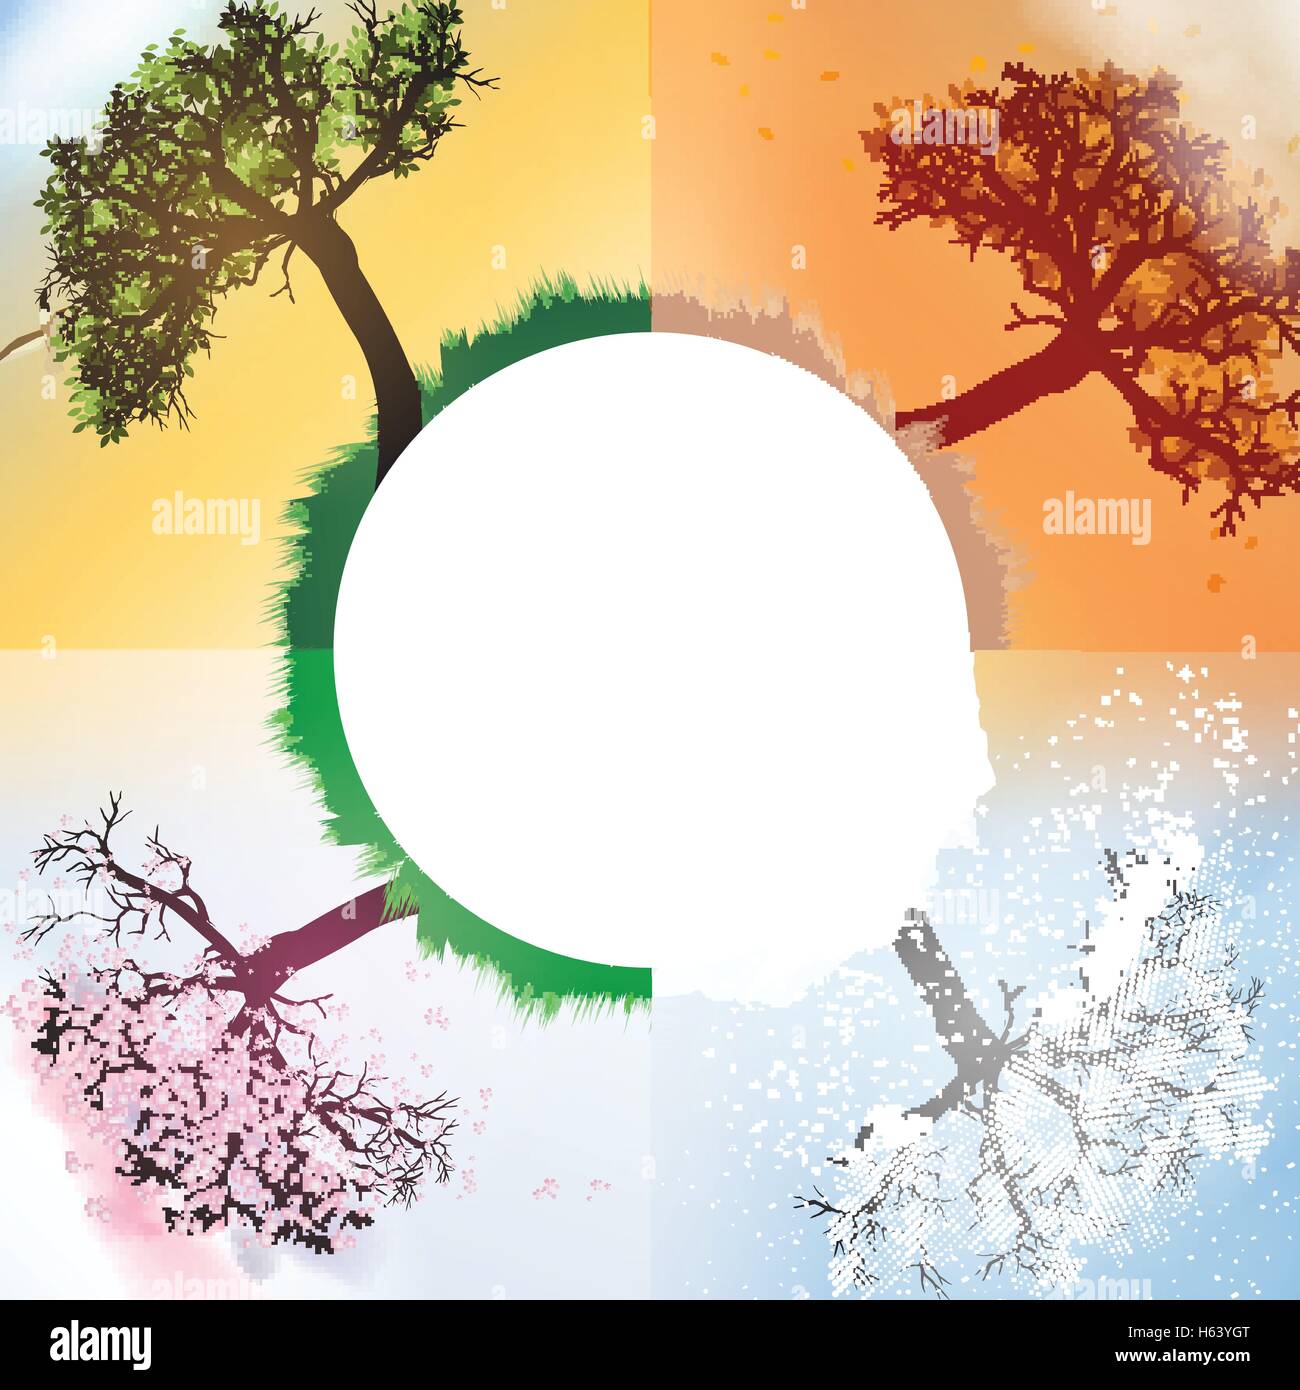 Vier Jahreszeiten Frühling, Sommer, Herbst, Winter-Banner mit abstrakte Bäume - Vektor-Illustration Stock Vektor